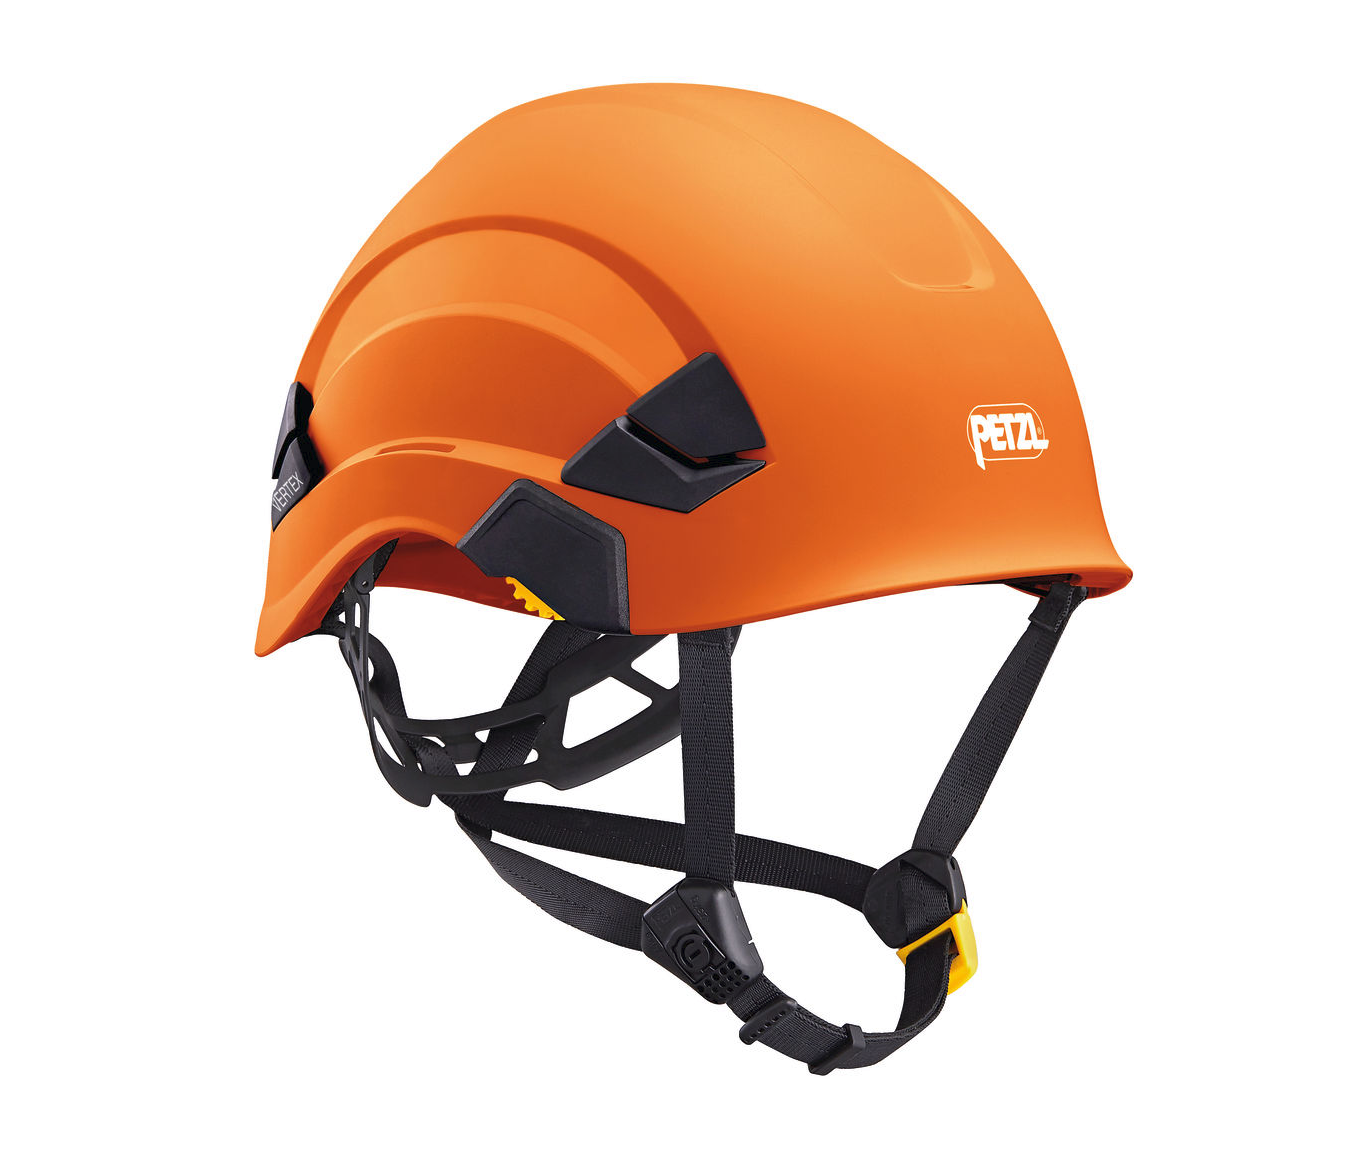 Petzl Helmet VERTEX® - Orange - Risk Response Rescue